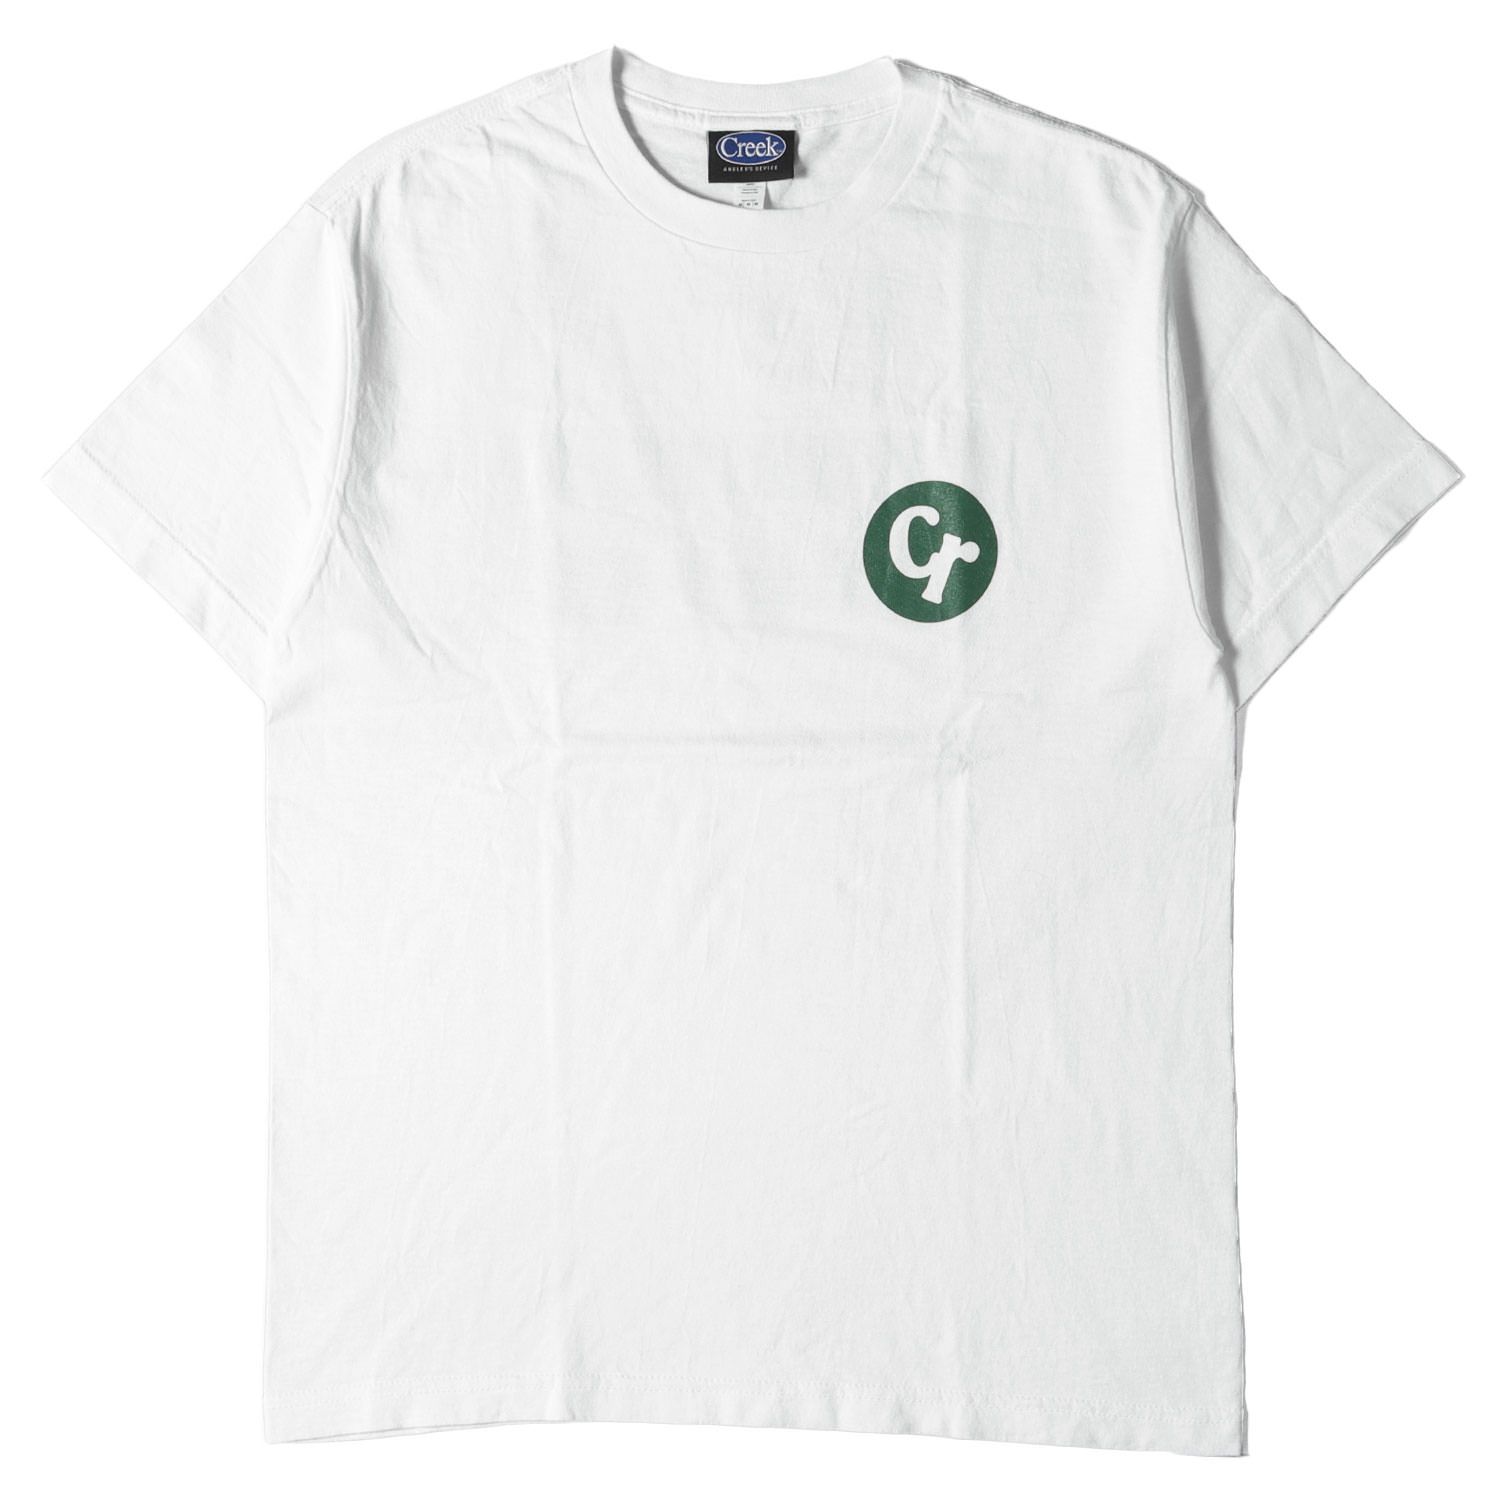 creek angler's device Tシャツ 白 M - Tシャツ/カットソー(半袖/袖なし)